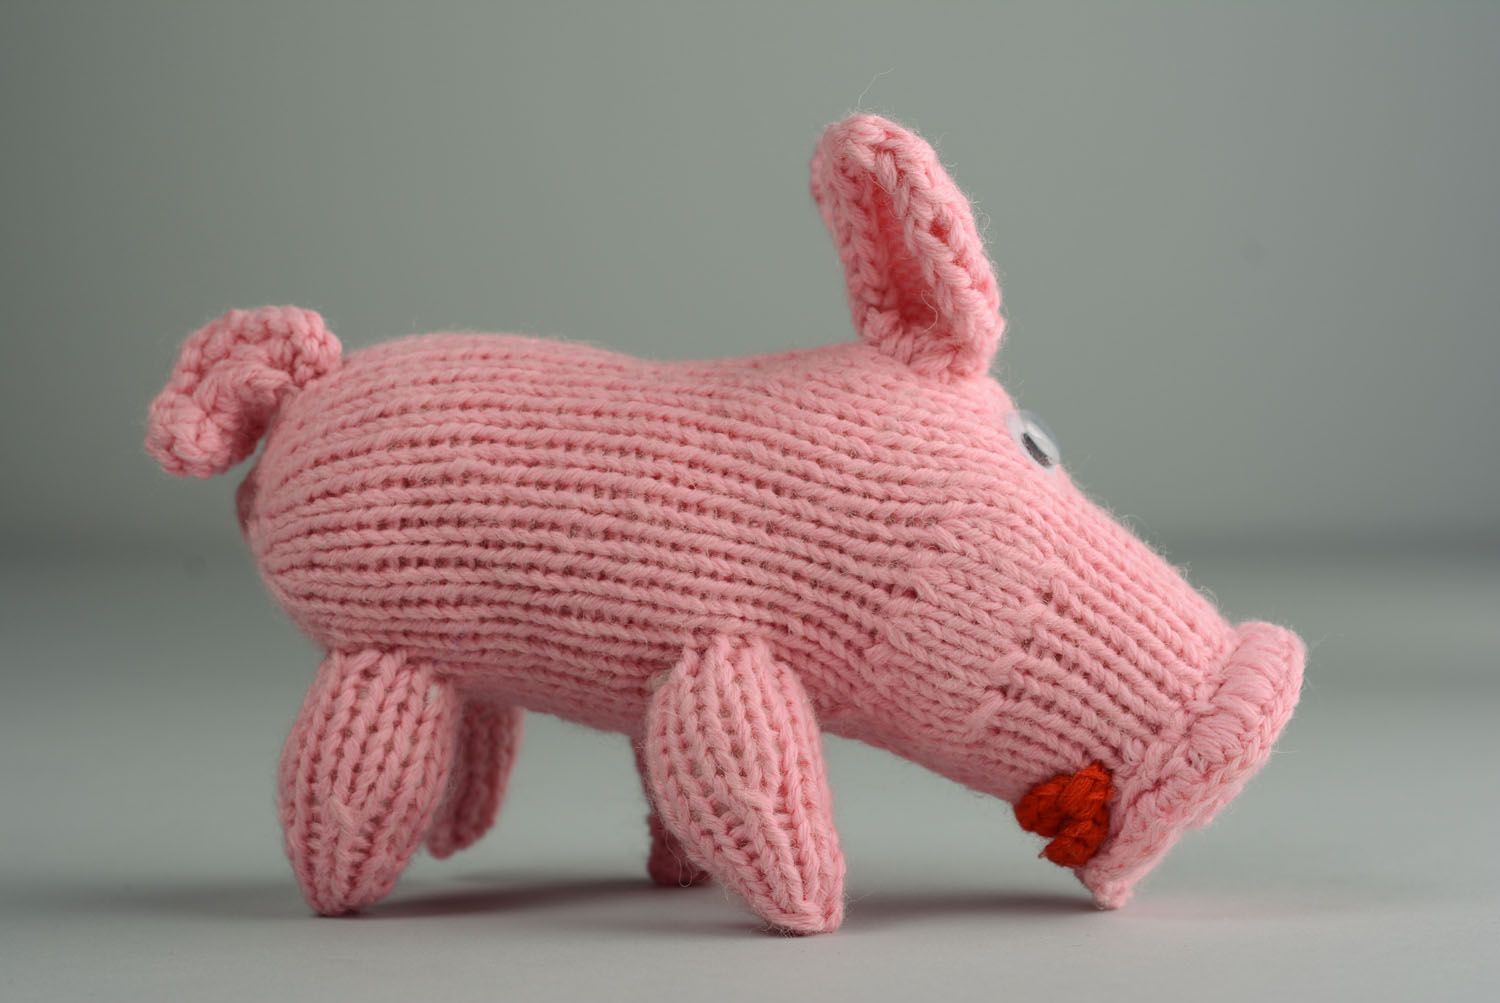 Homemade crochet toy Pig photo 5